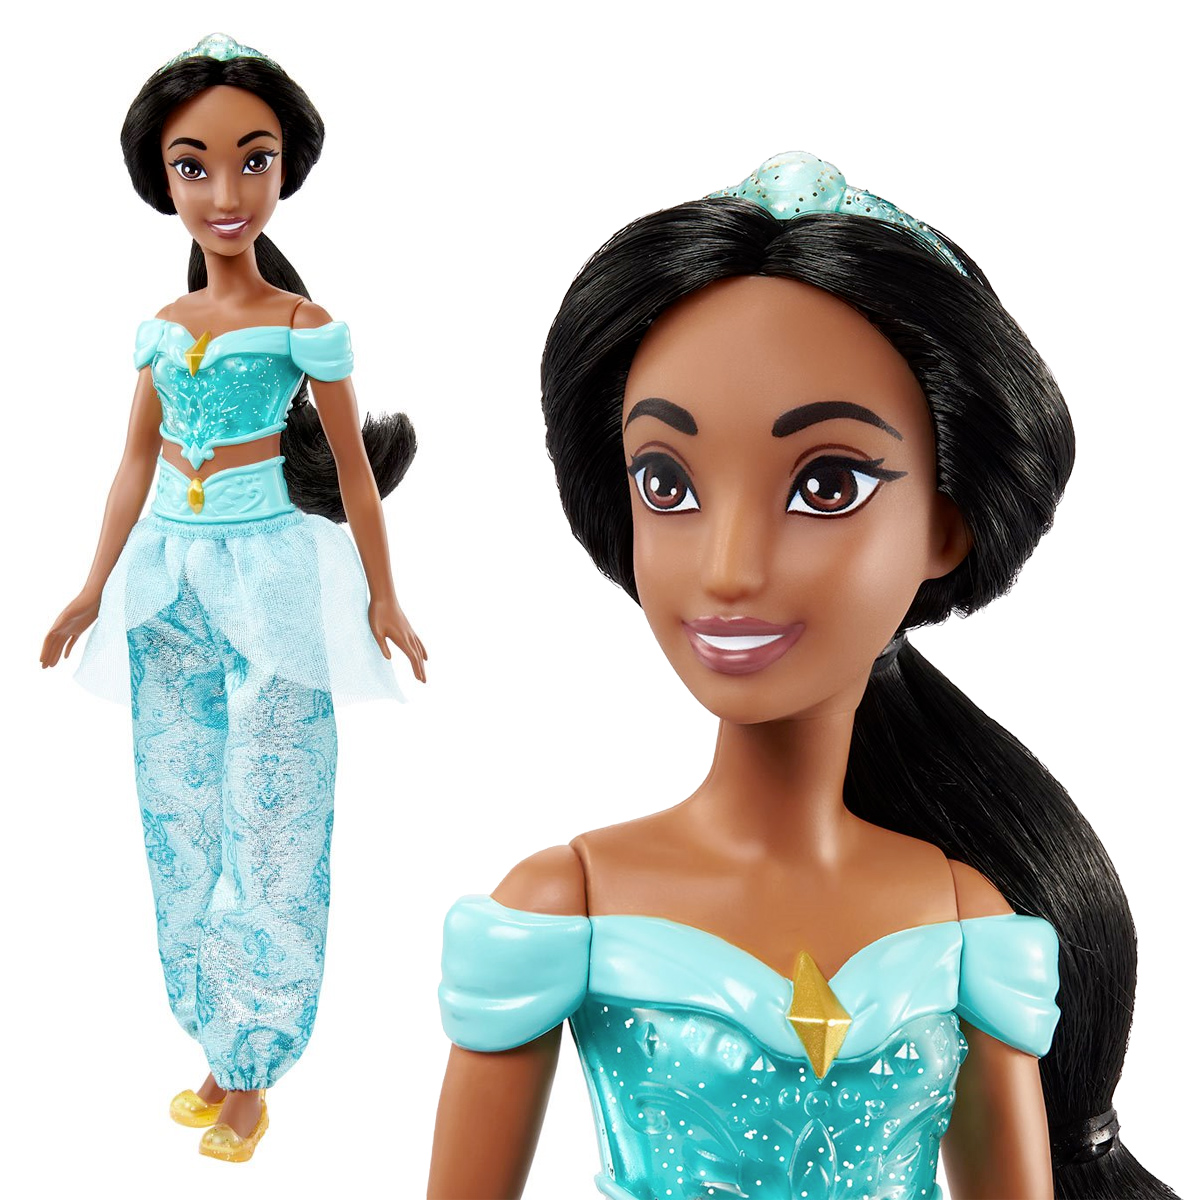 Disney Princess Mattel 11-inches Fashion Dolls